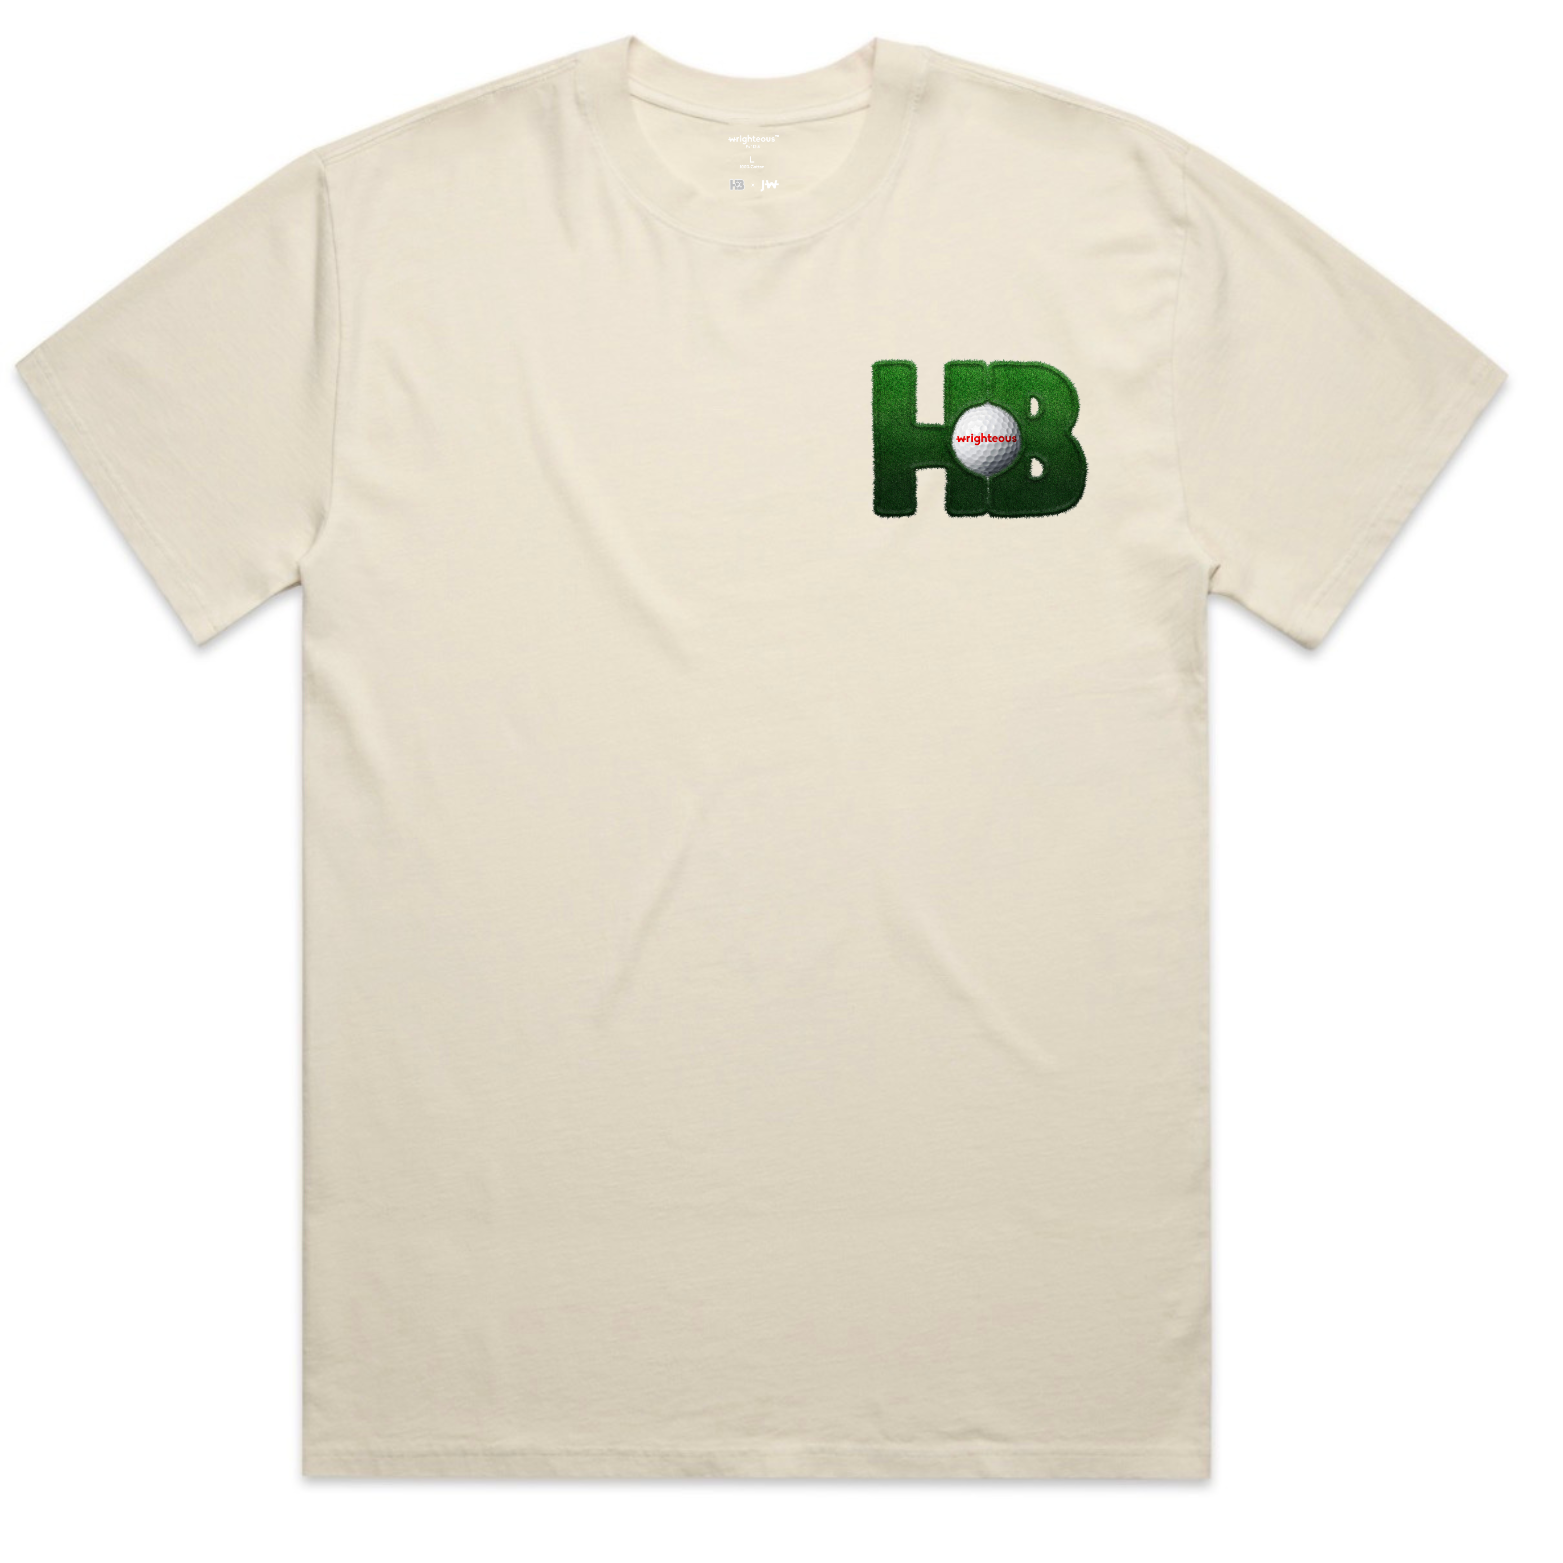 hillbilly bogey t-shirt